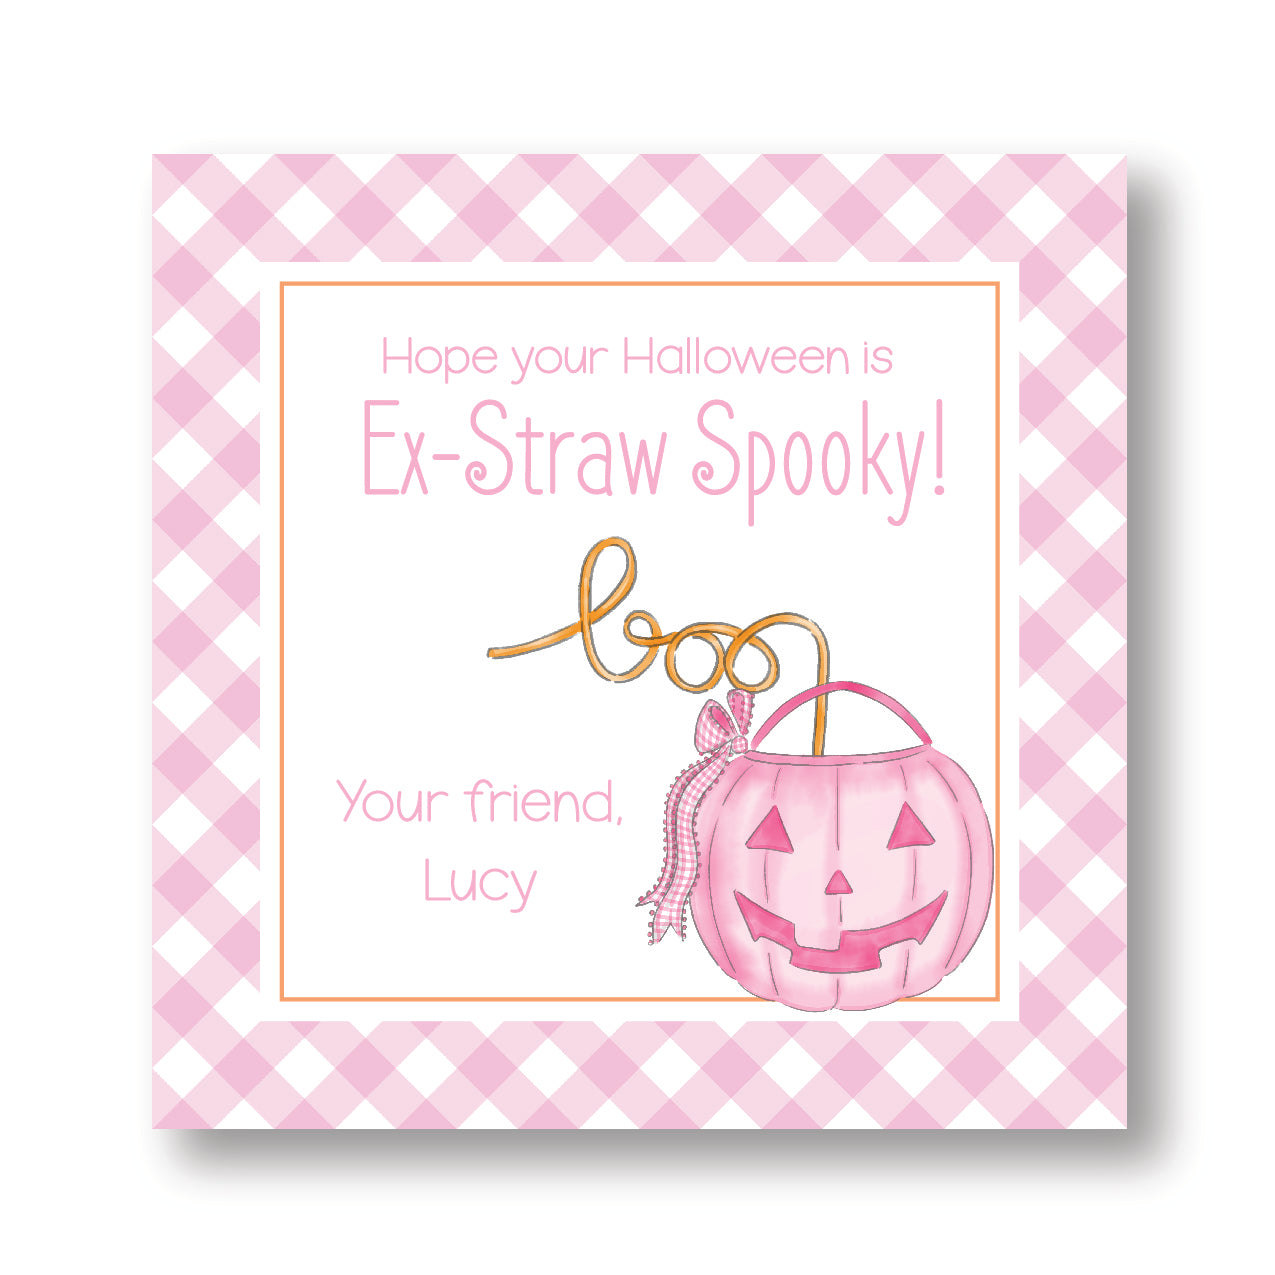 Ex-Straw Spooky Halloween Tag Pink